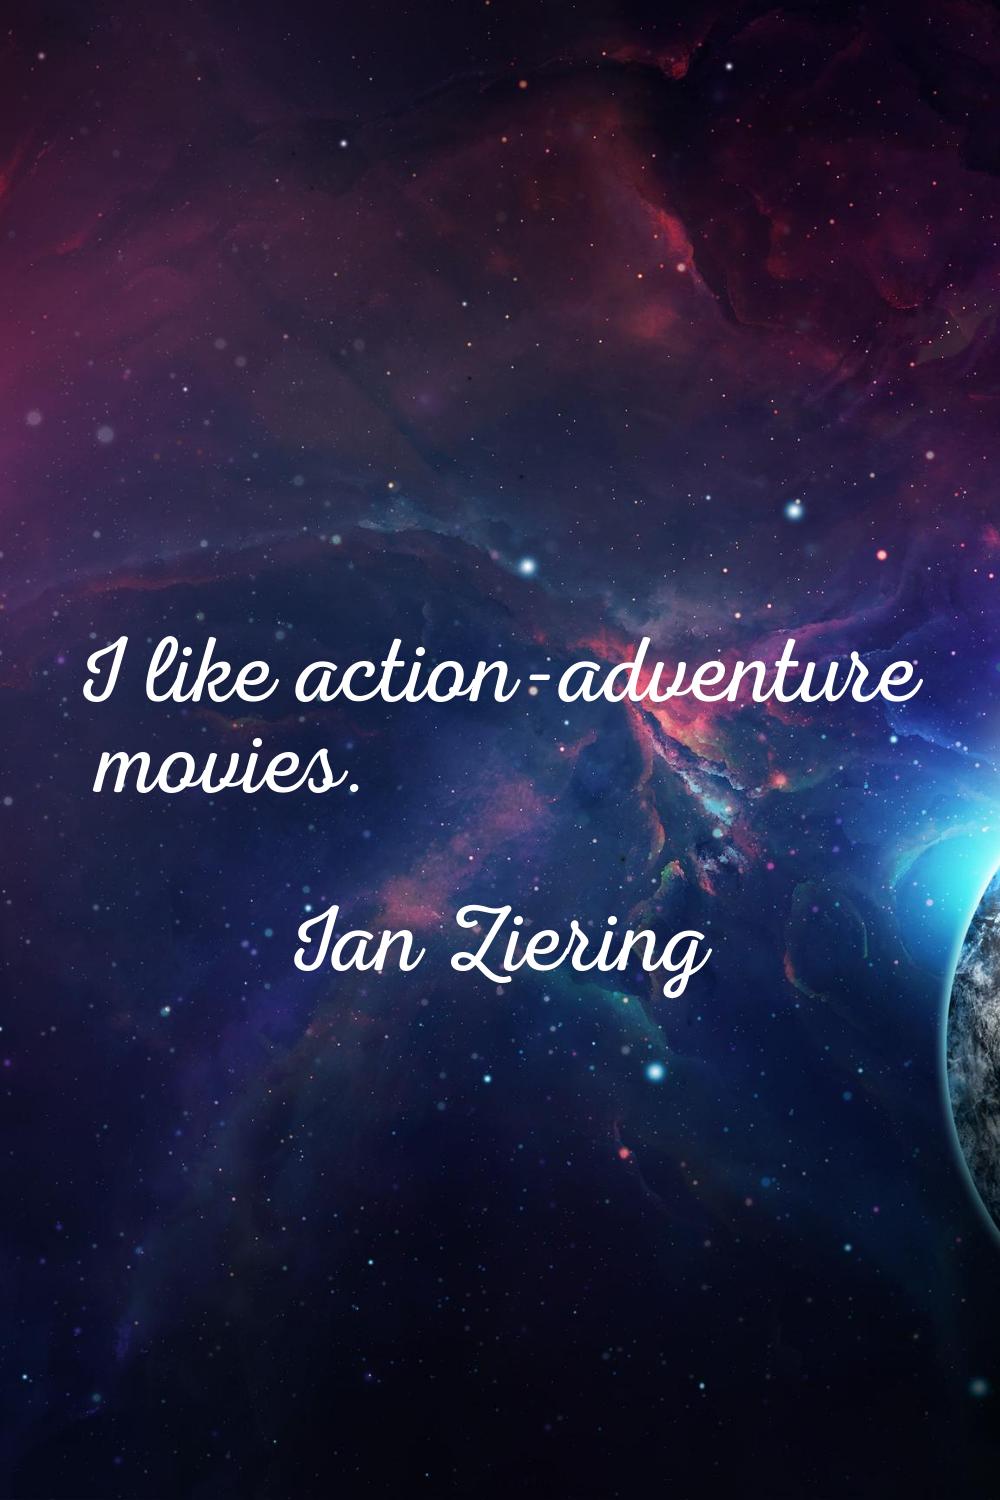 I like action-adventure movies.